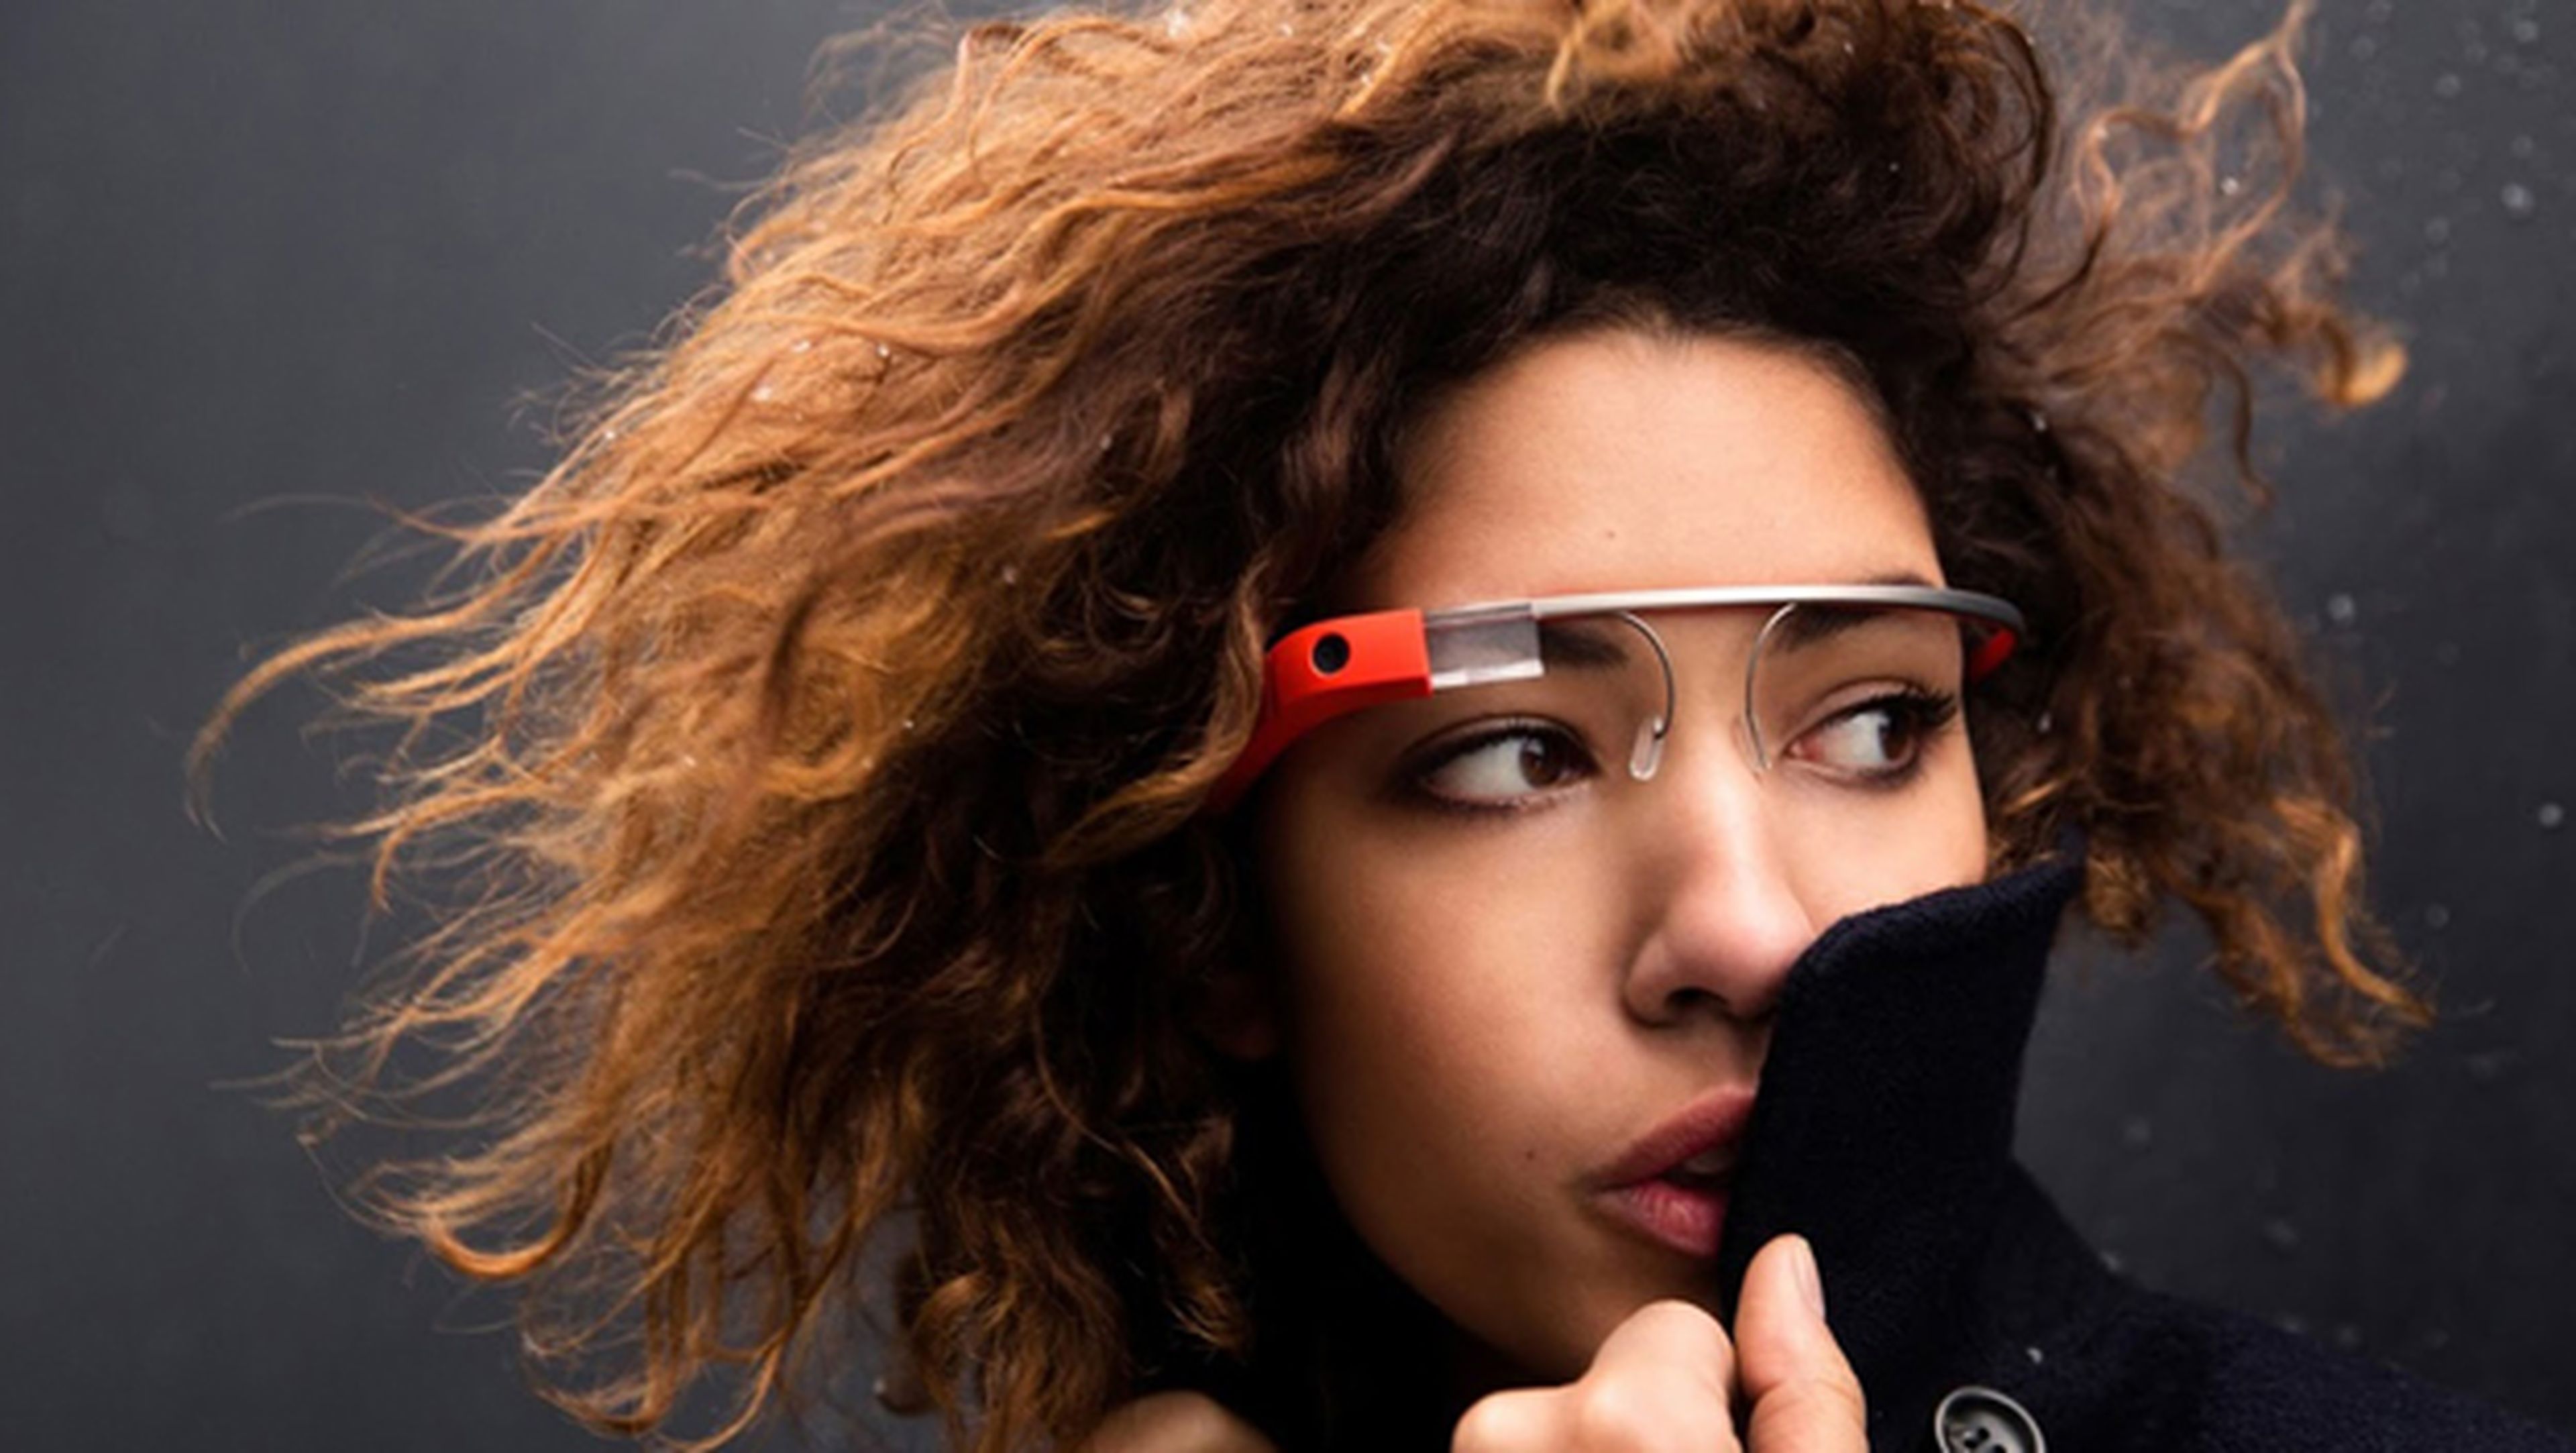 Google Glass Consumer Edition